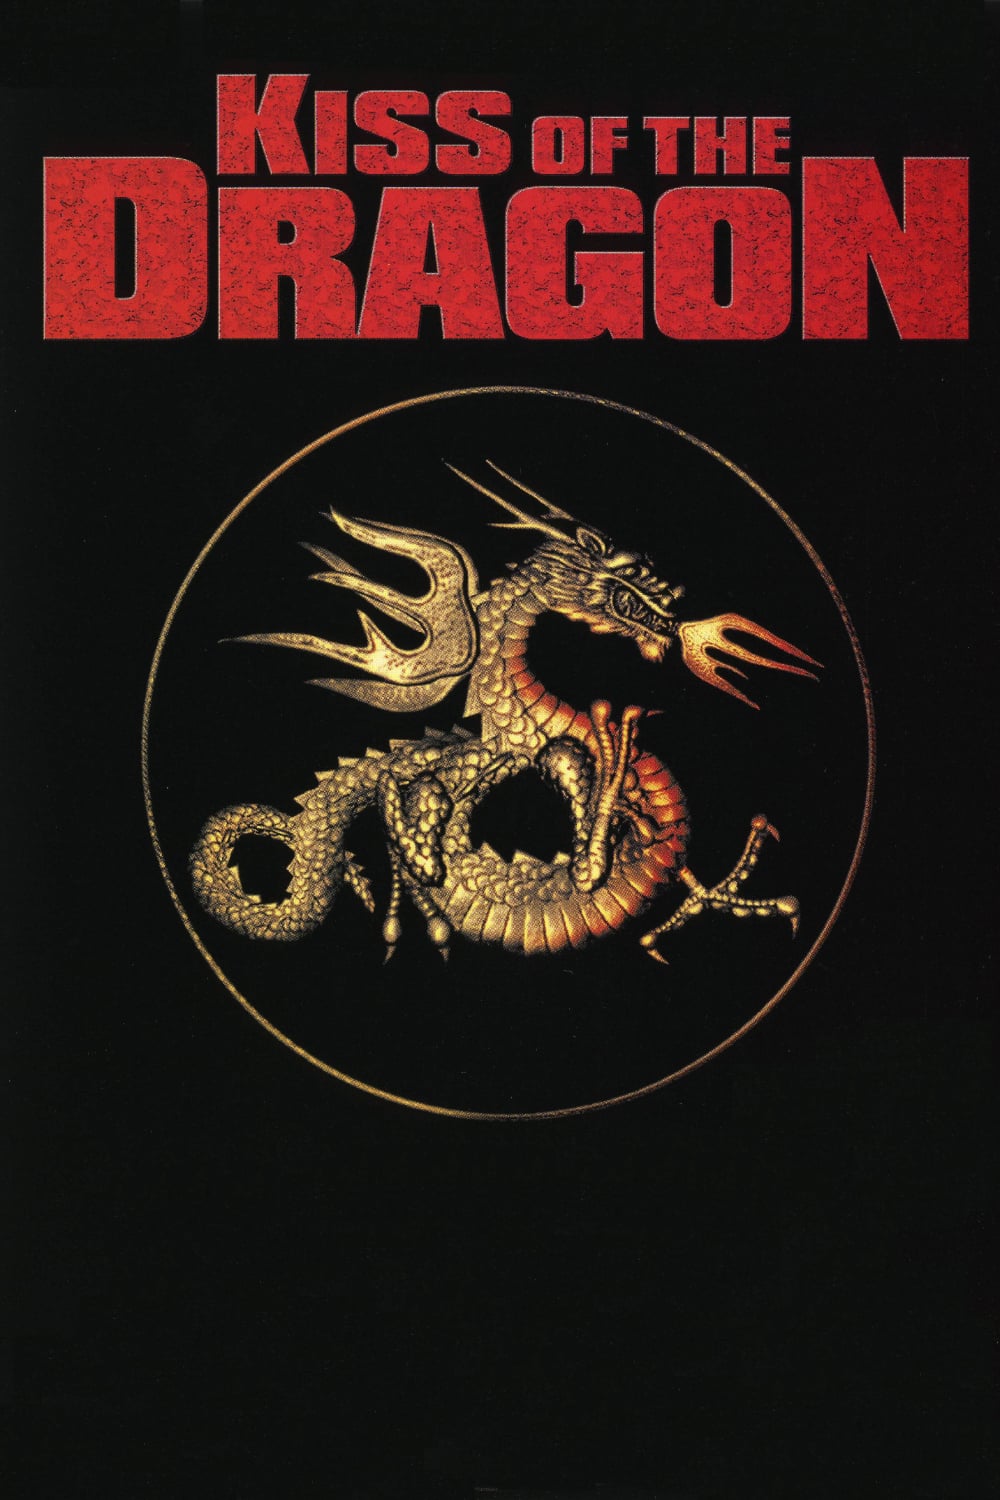 Plakat von "Kiss of the Dragon"